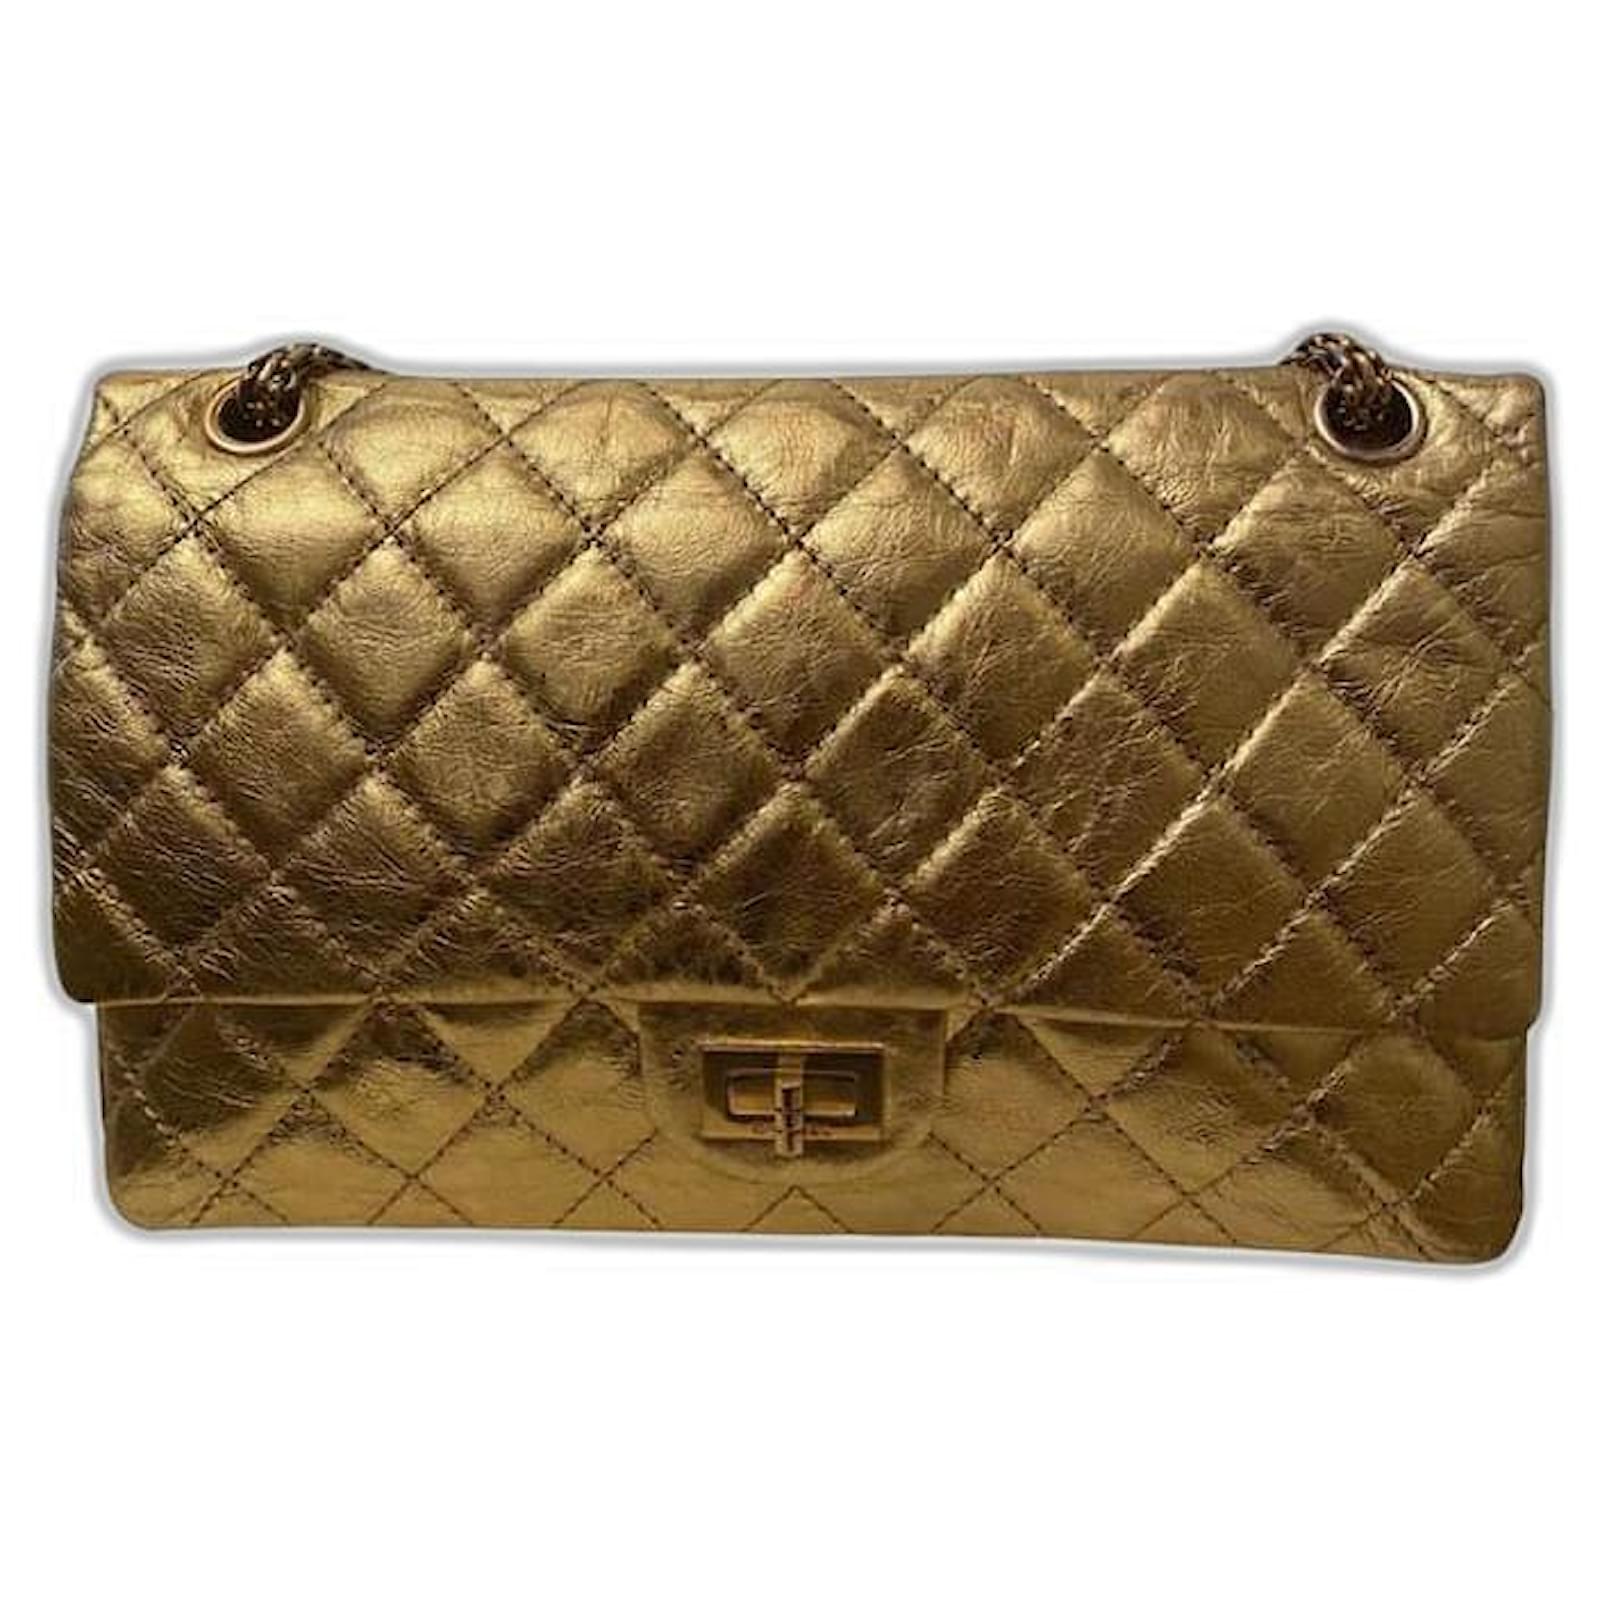 Handbags Chanel 2.55 Metaic Gold